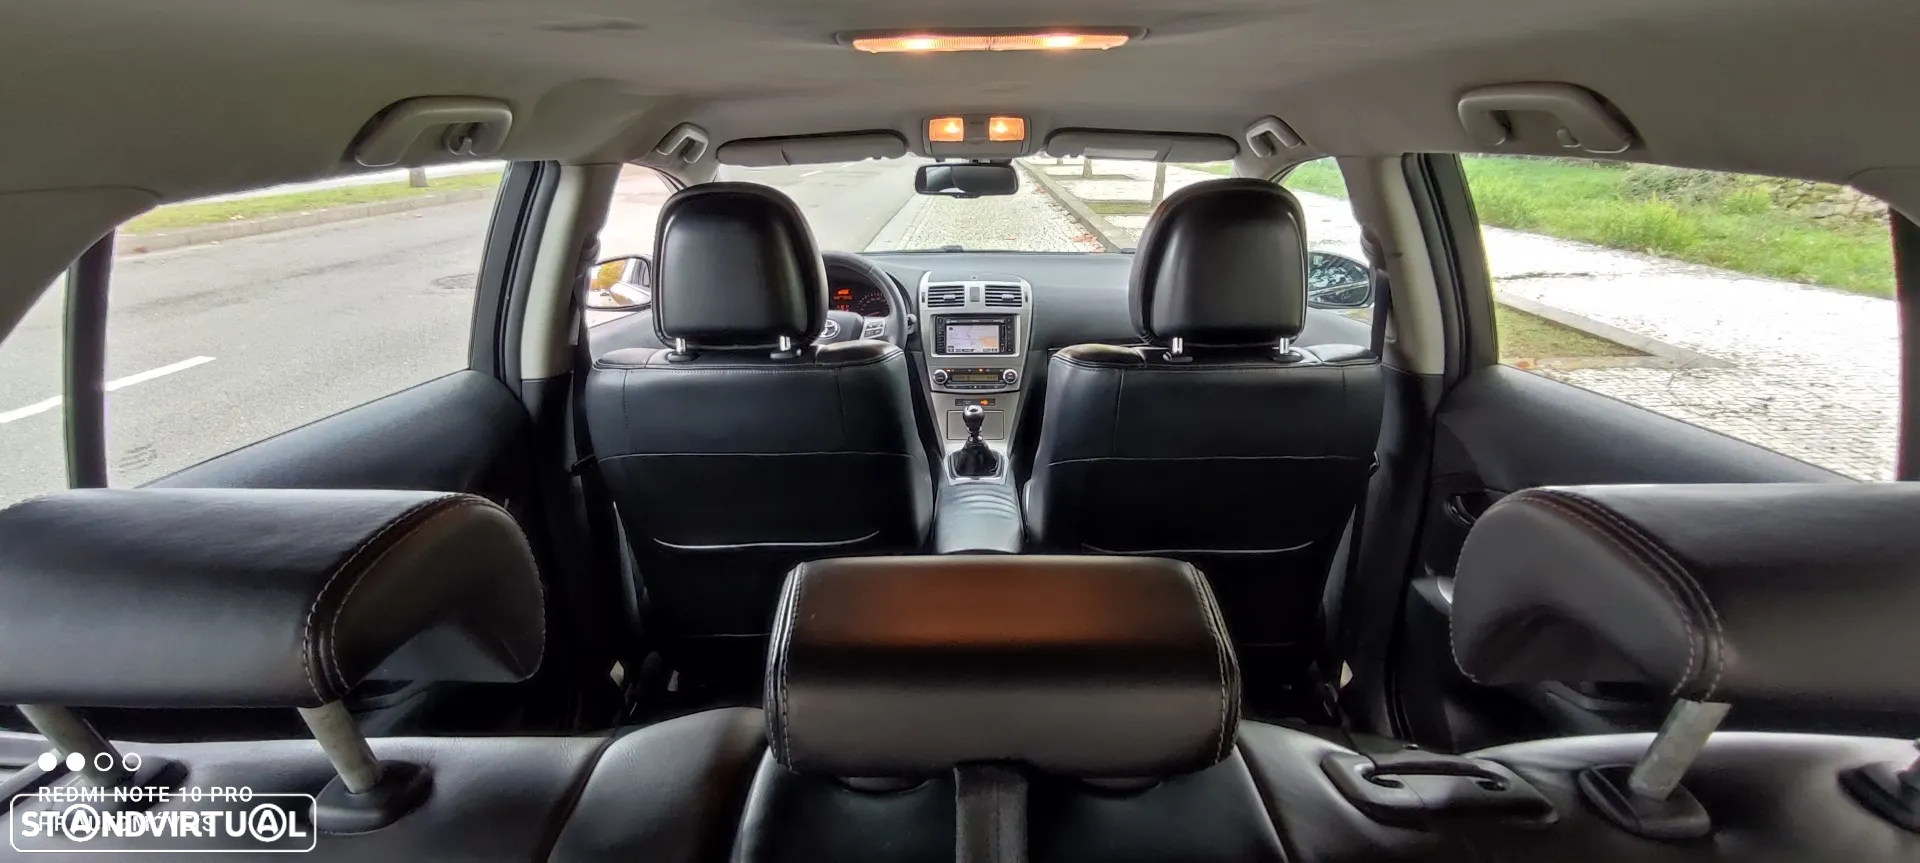 Toyota Avensis SW 2.0 D-4D Exclusive +Pele+GPS - 27